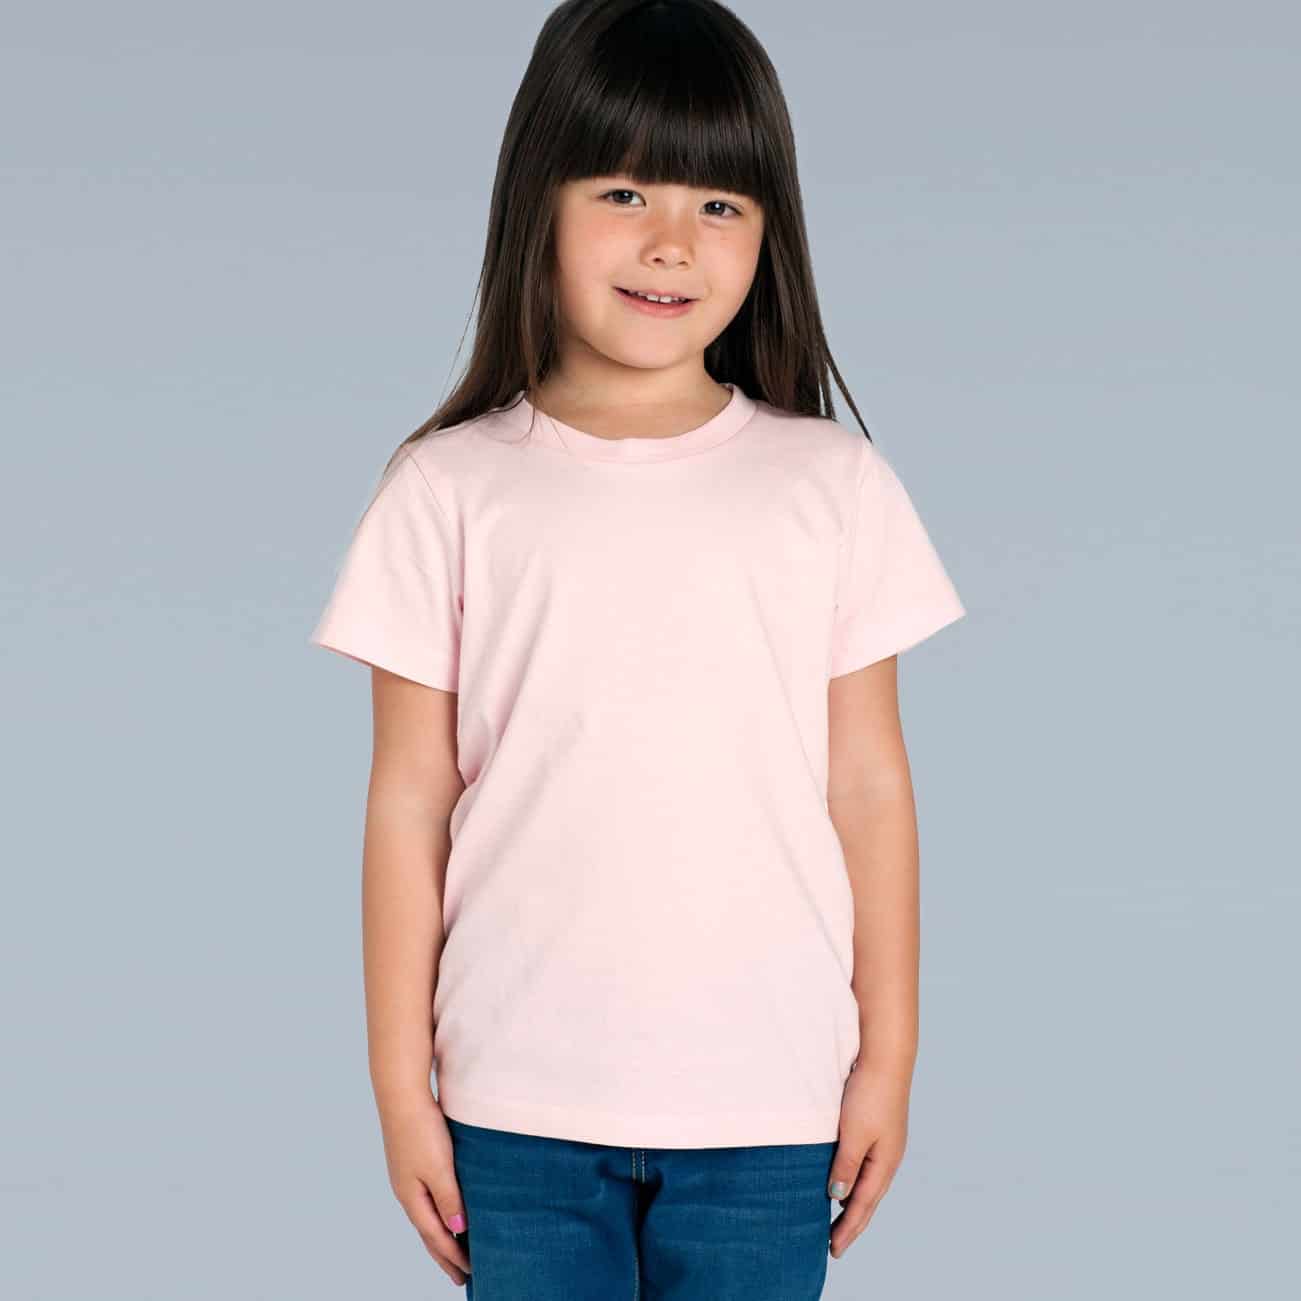 AS Colour - Kids & Youth Tee - Print on Demand Custom T-shirts ...